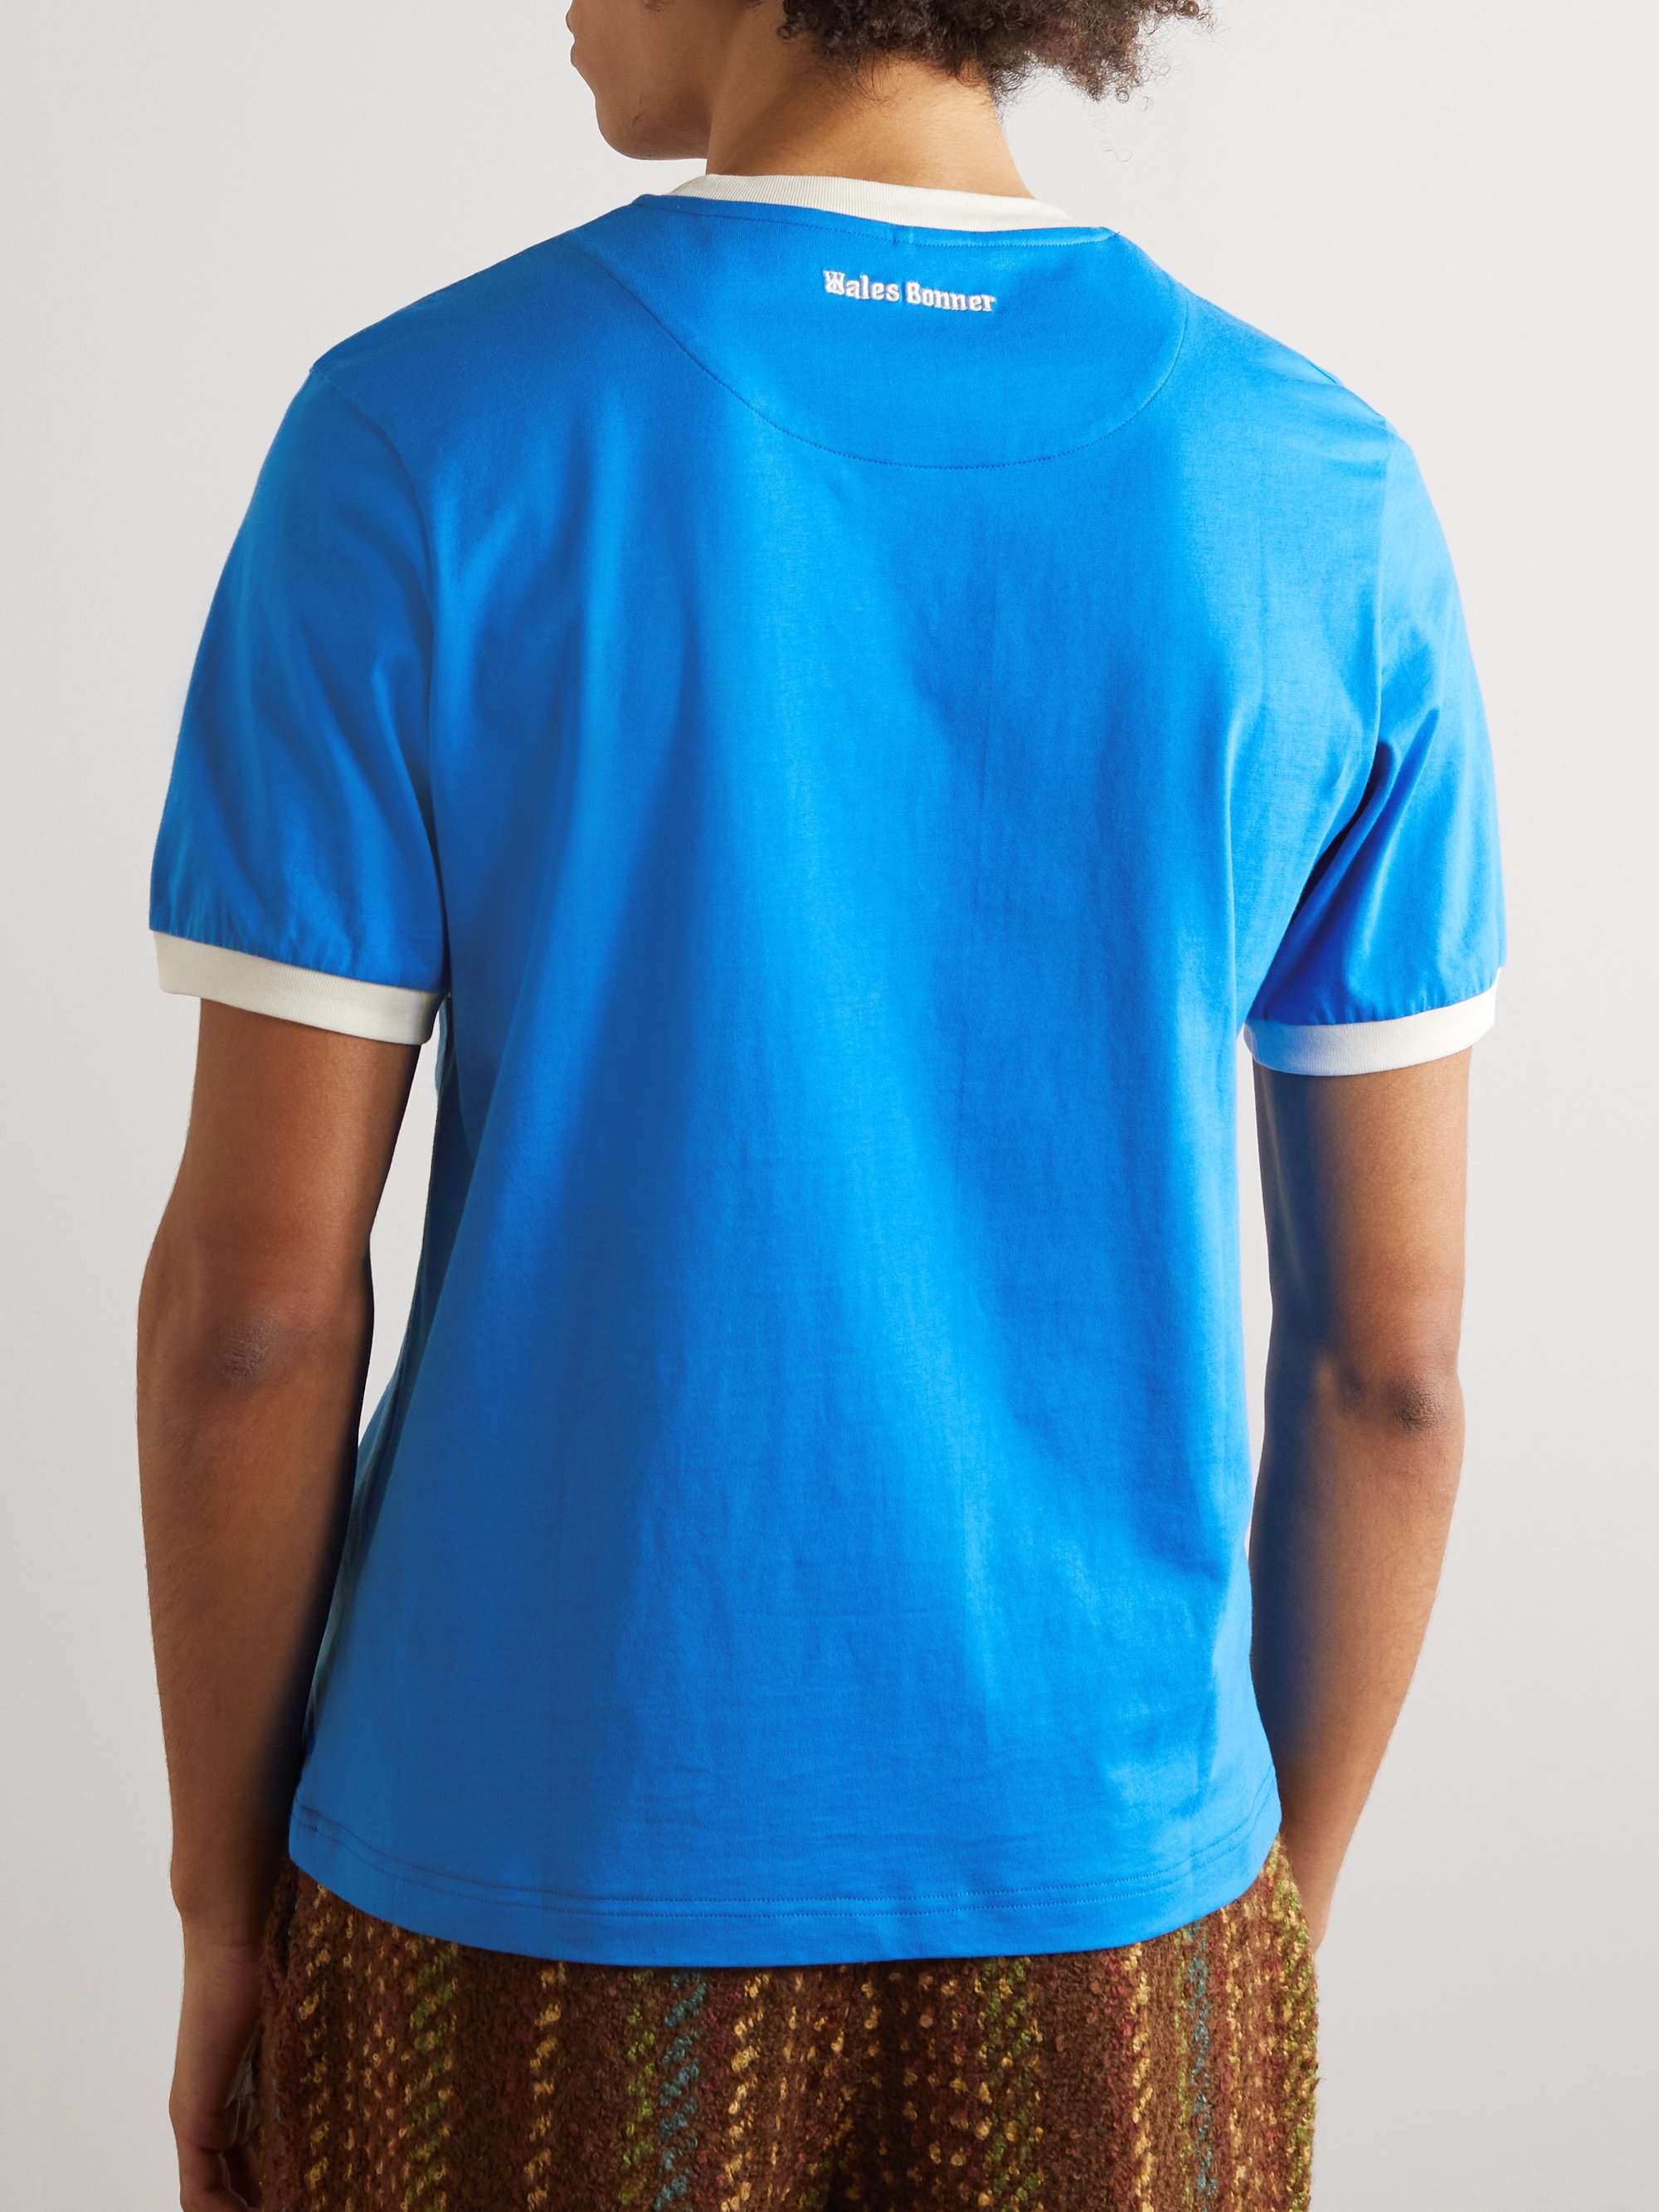 WALES BONNER Slim-Fit Printed Cotton-Jersey T-Shirt